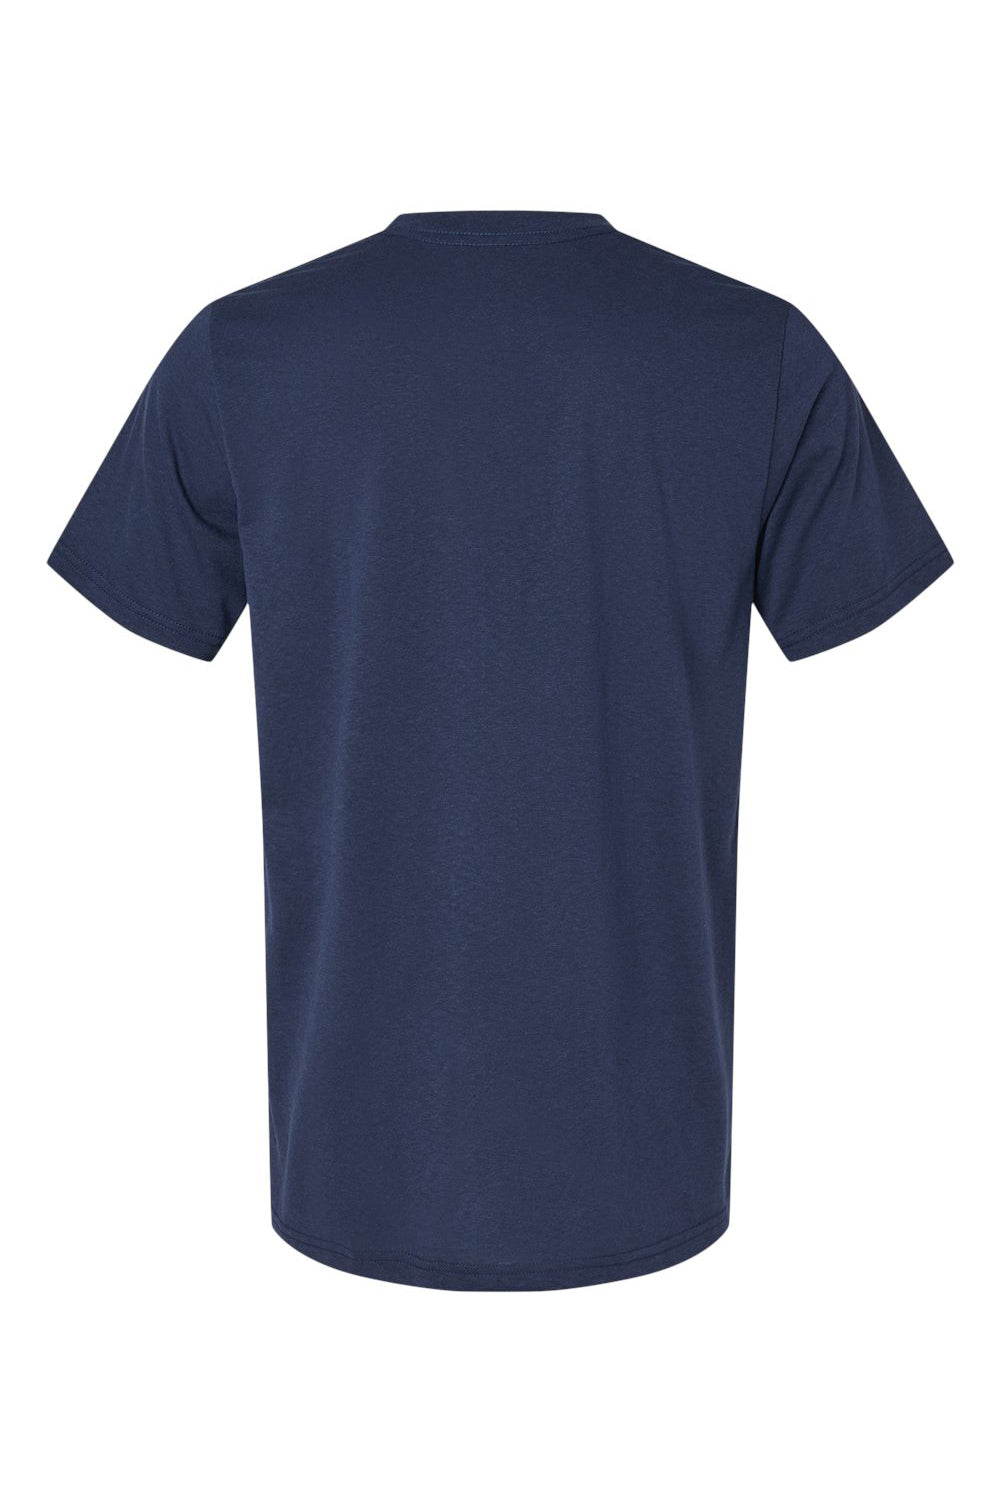 Bella + Canvas 3001ECO Mens EcoMax Short Sleeve Crewneck T-Shirt Navy Blue Flat Back